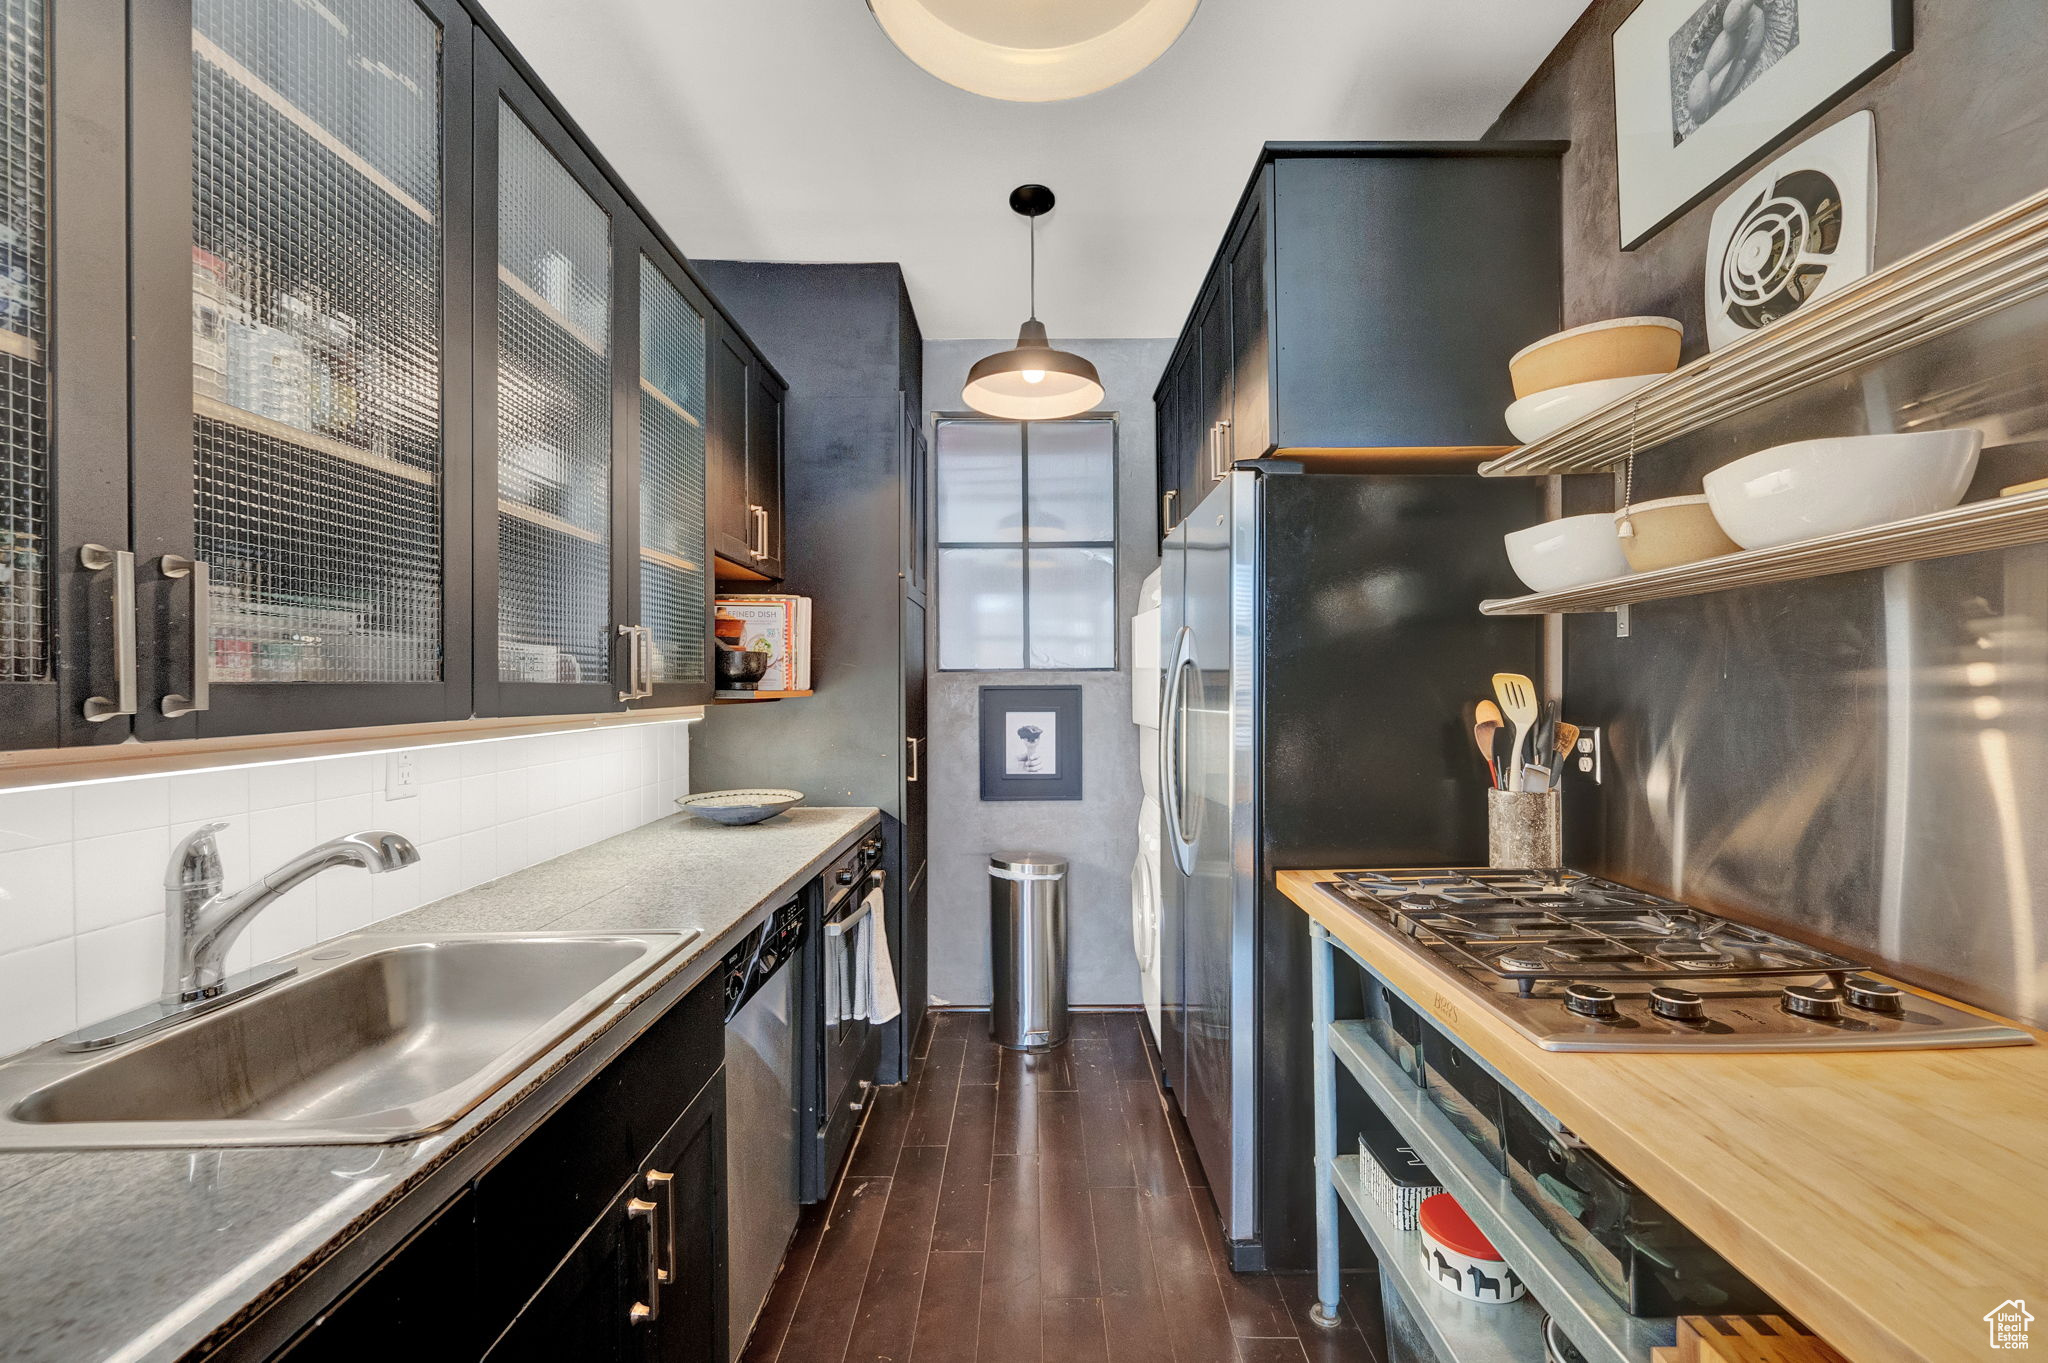 Kitchen with hanging light fixtures, backsplash, stainless steel appliances, dark wood-type flooring, and sink